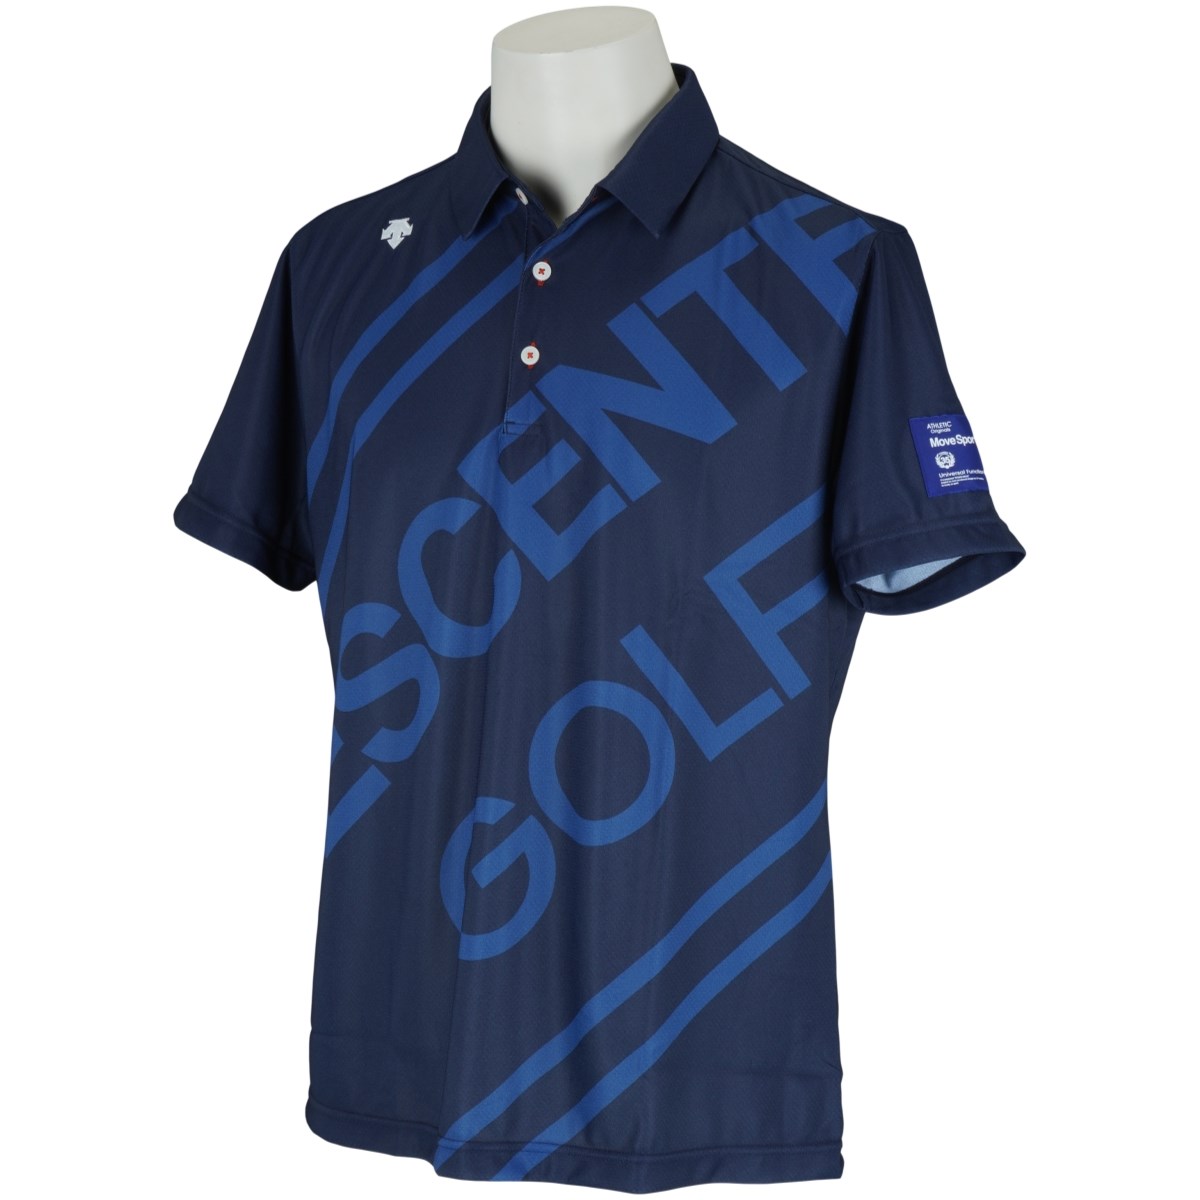 dショッピング |デサントゴルフ DESCENTE GOLF BLUE LABEL ECO ダイヤニットライジングロゴプリント半袖ポロシャツ